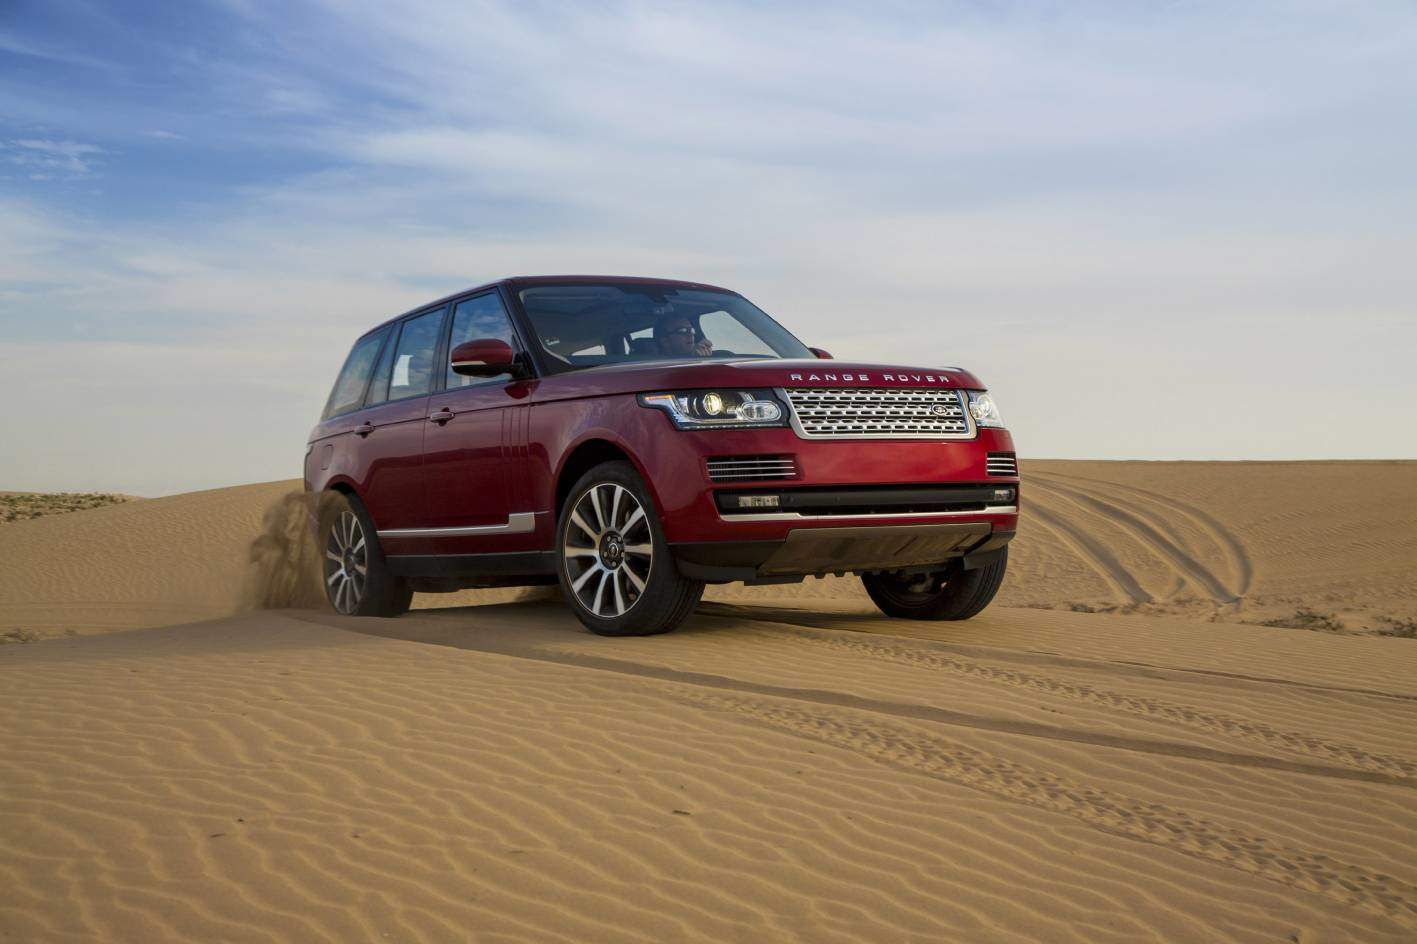 Hybrid Range Rover due in 2014